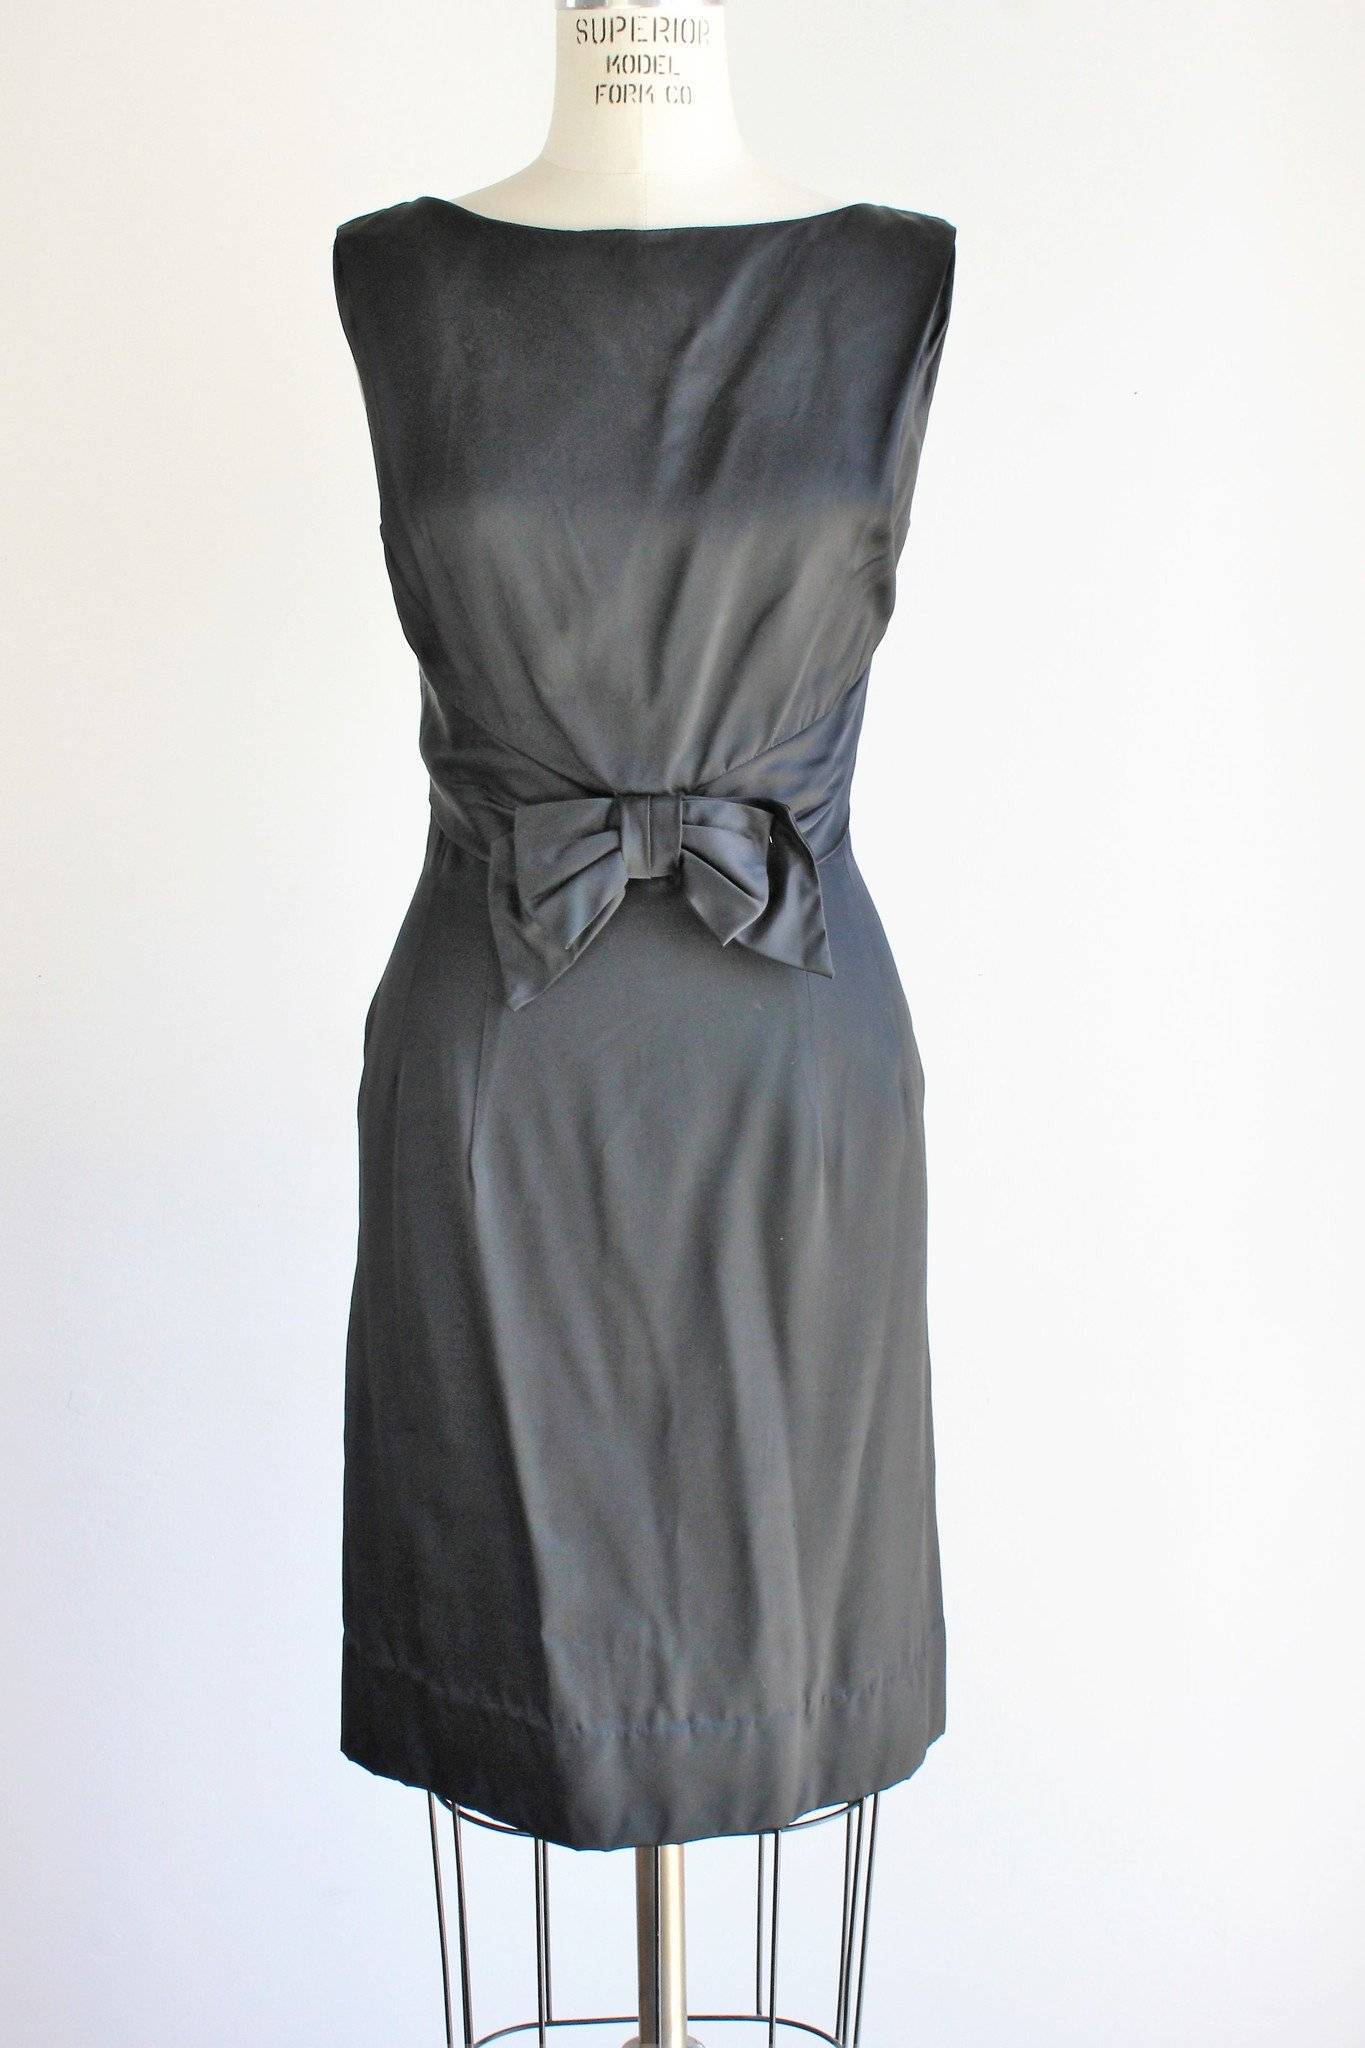 Vintage 1950s Black Faille Molly Modes Little Black Dress-The Black Velvet Emporium-Big Bow,Dress,faille,LBD,LBD 1950 50s,Little Black Dress,molly Modes,pencil skirt,Vintage,Vintage Clothing,Wiggle